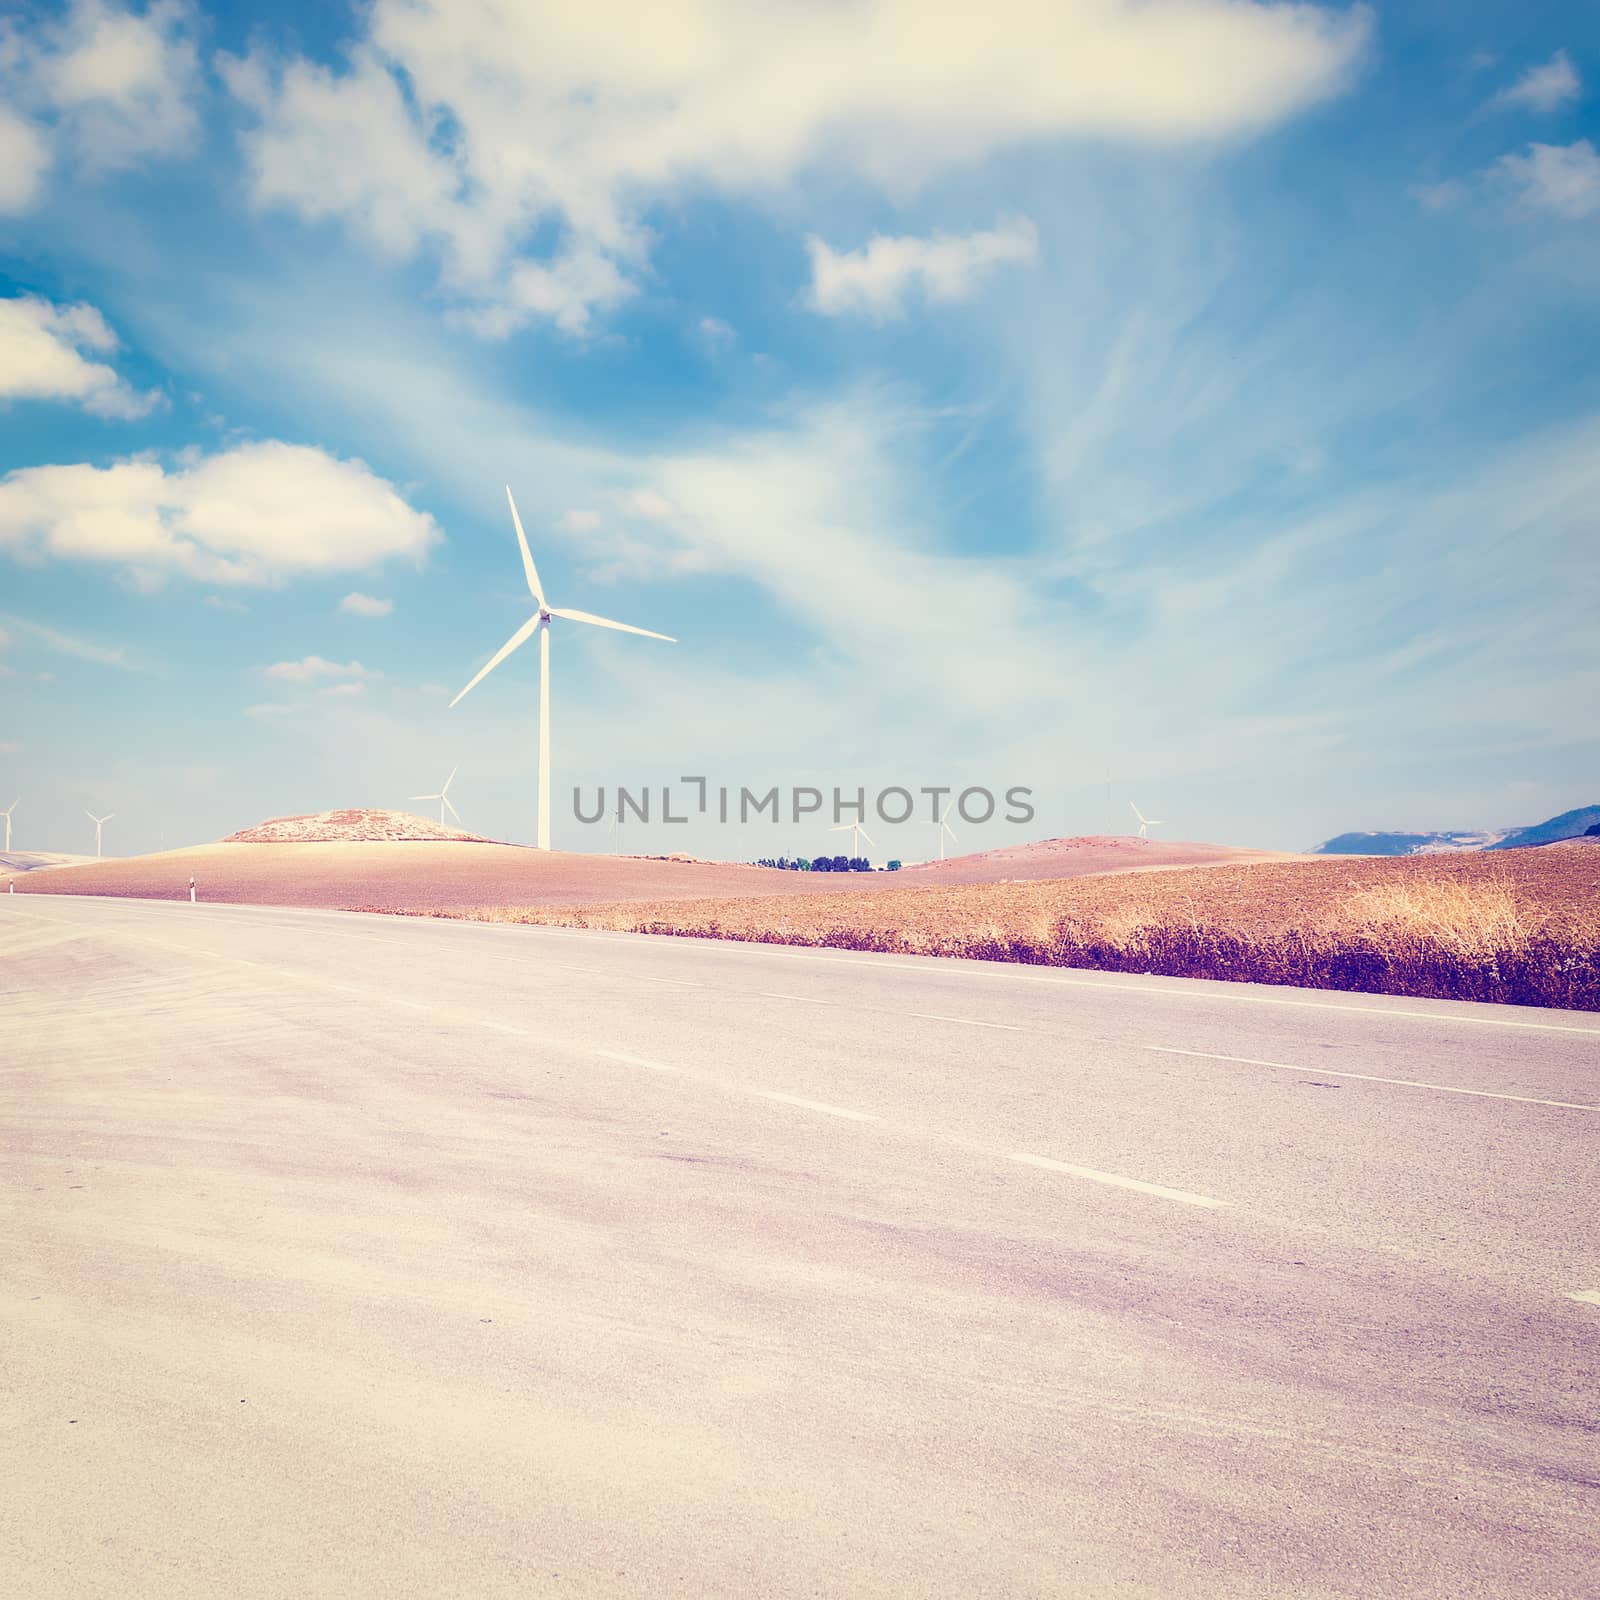 Asphalt Road on the Background of the Modern Wind Turbines Producing Energy in Spain, Instagram Effect